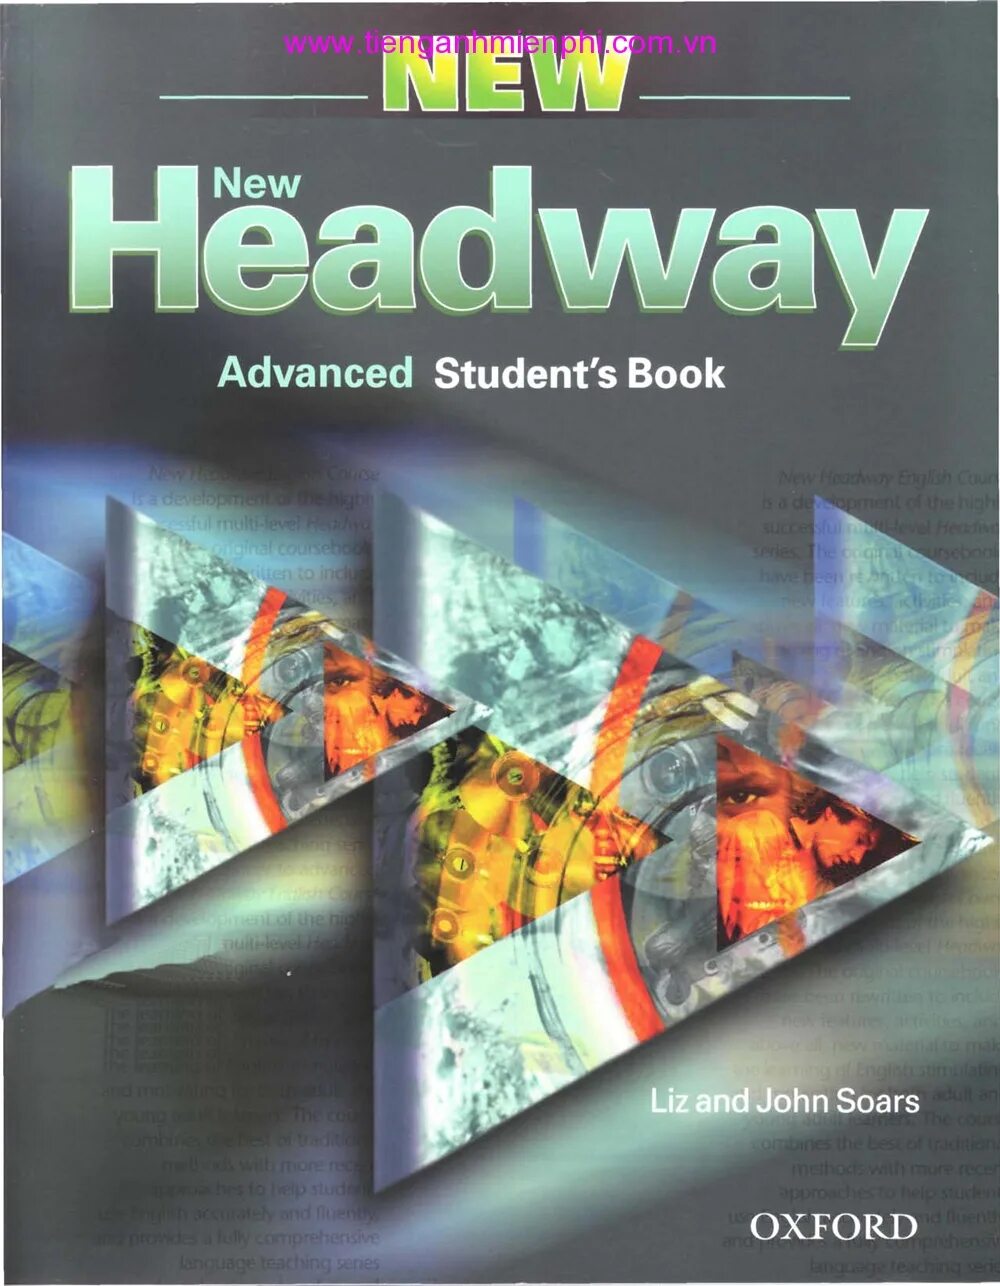 Английская книга Headway. New Headway English course student's book. Headway student's book книга.